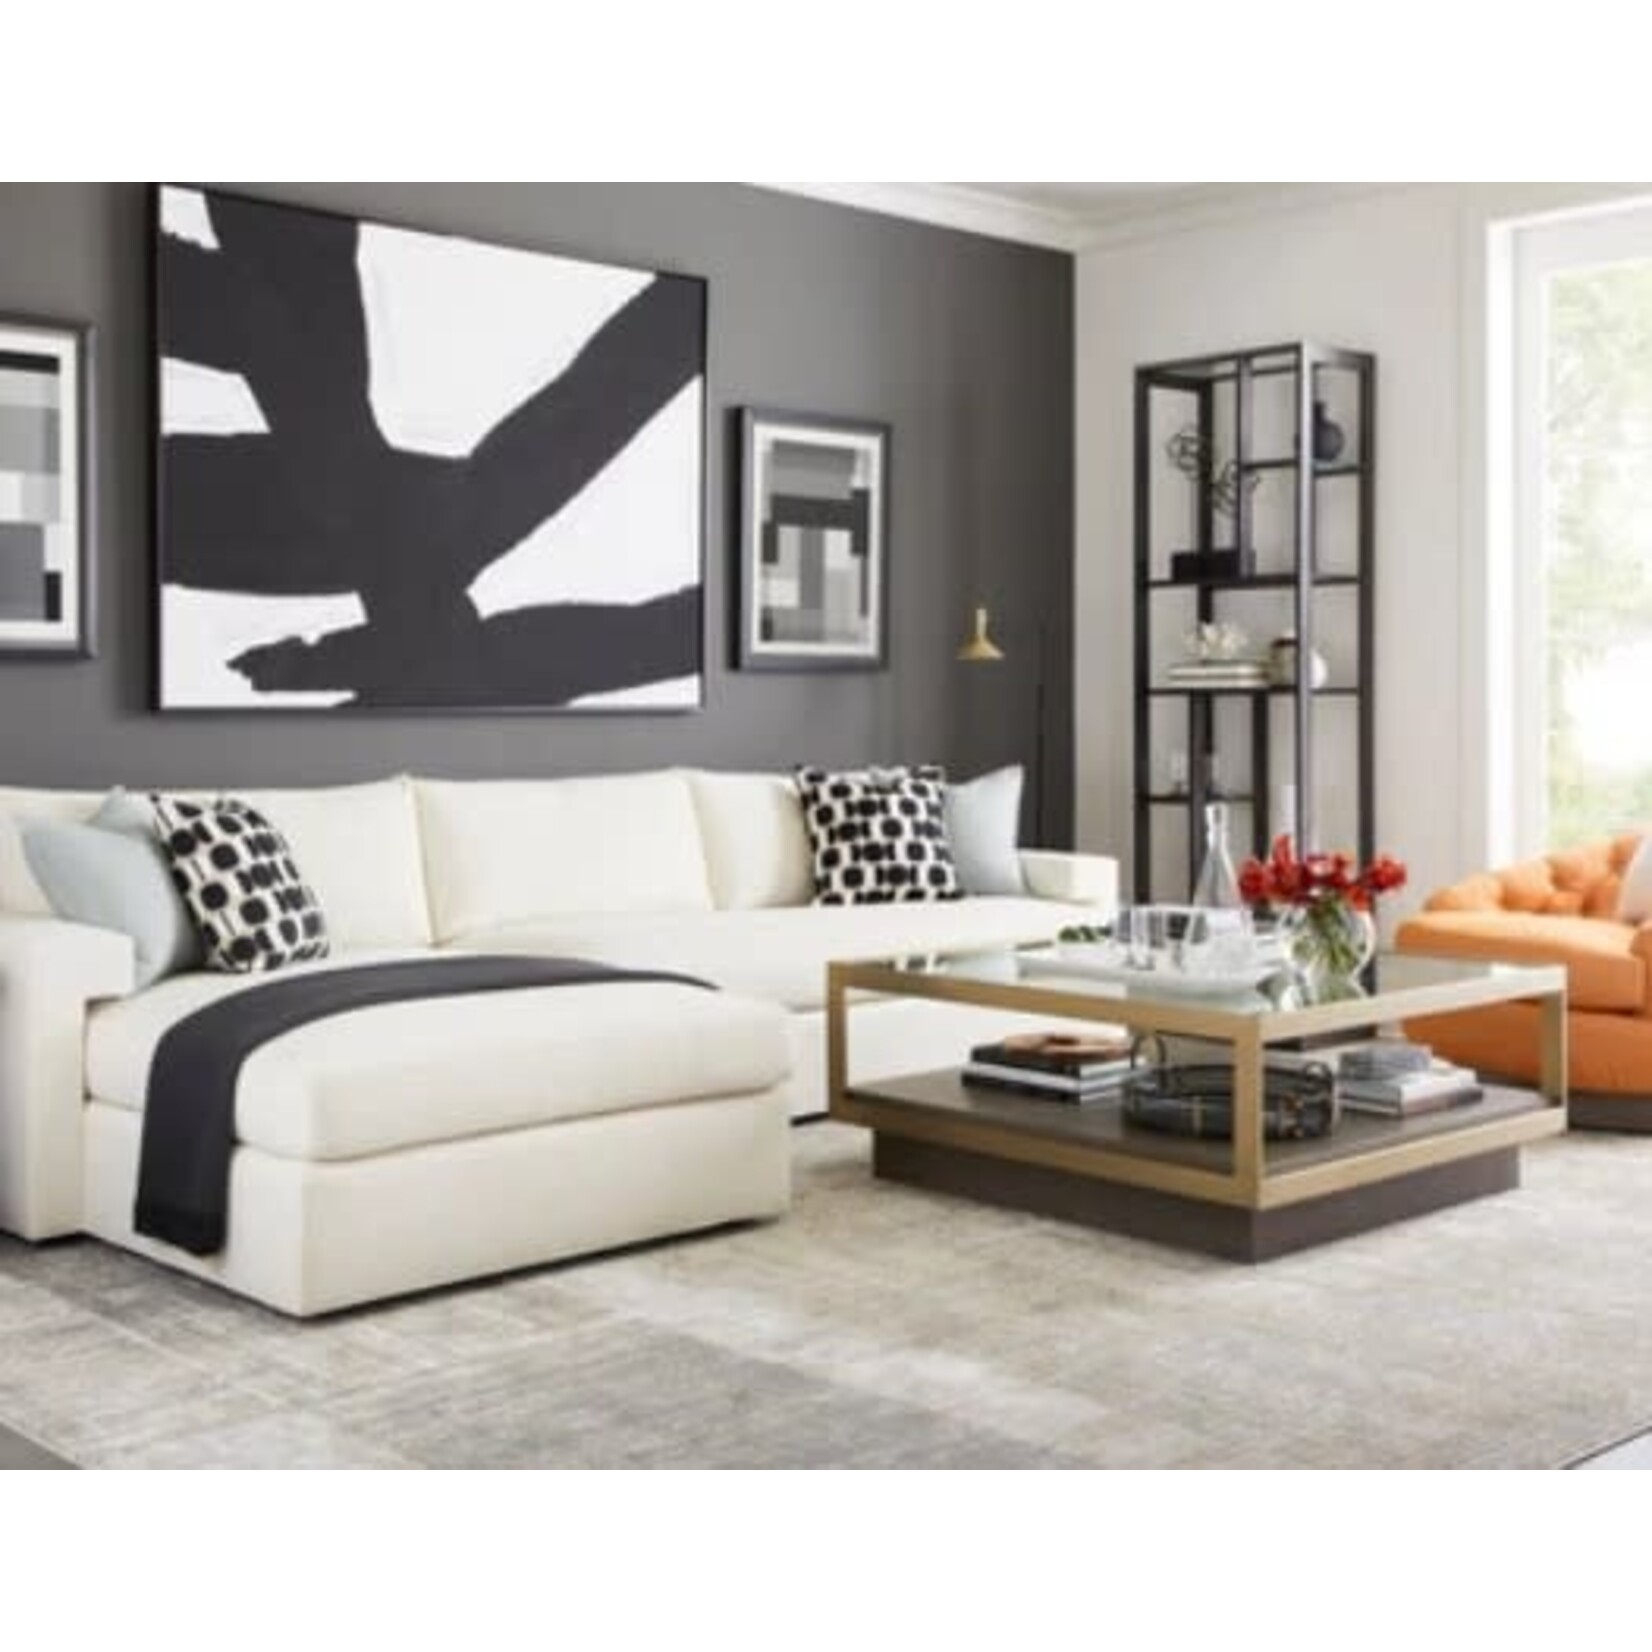 Vanguard Furniture Pengrove  Black Textured Metal Etagere